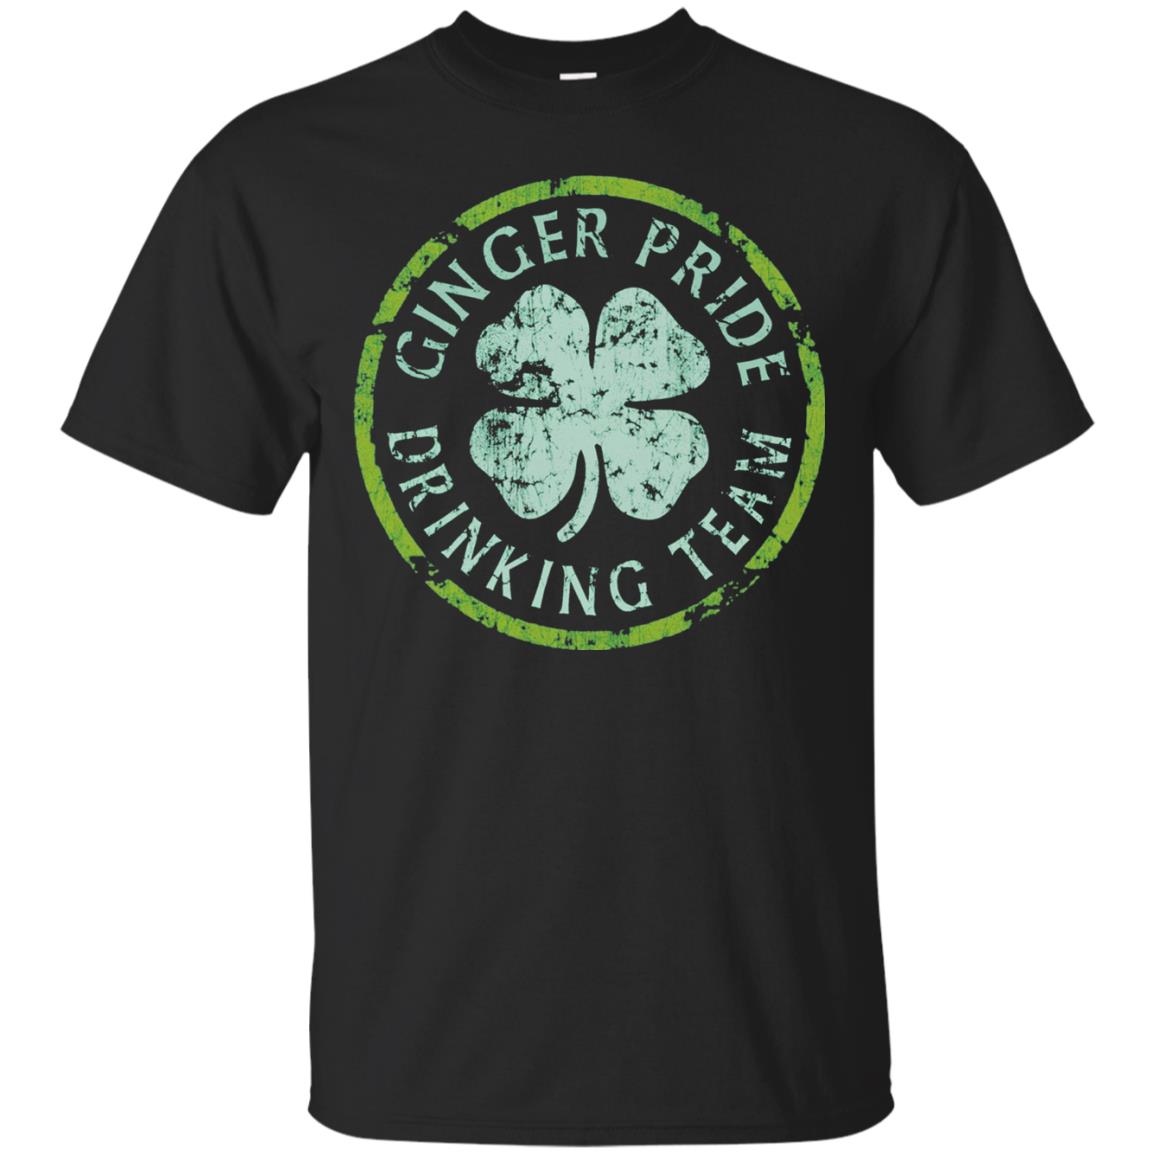 Funny Ginger Pride Drinking Team Irish T-shirt